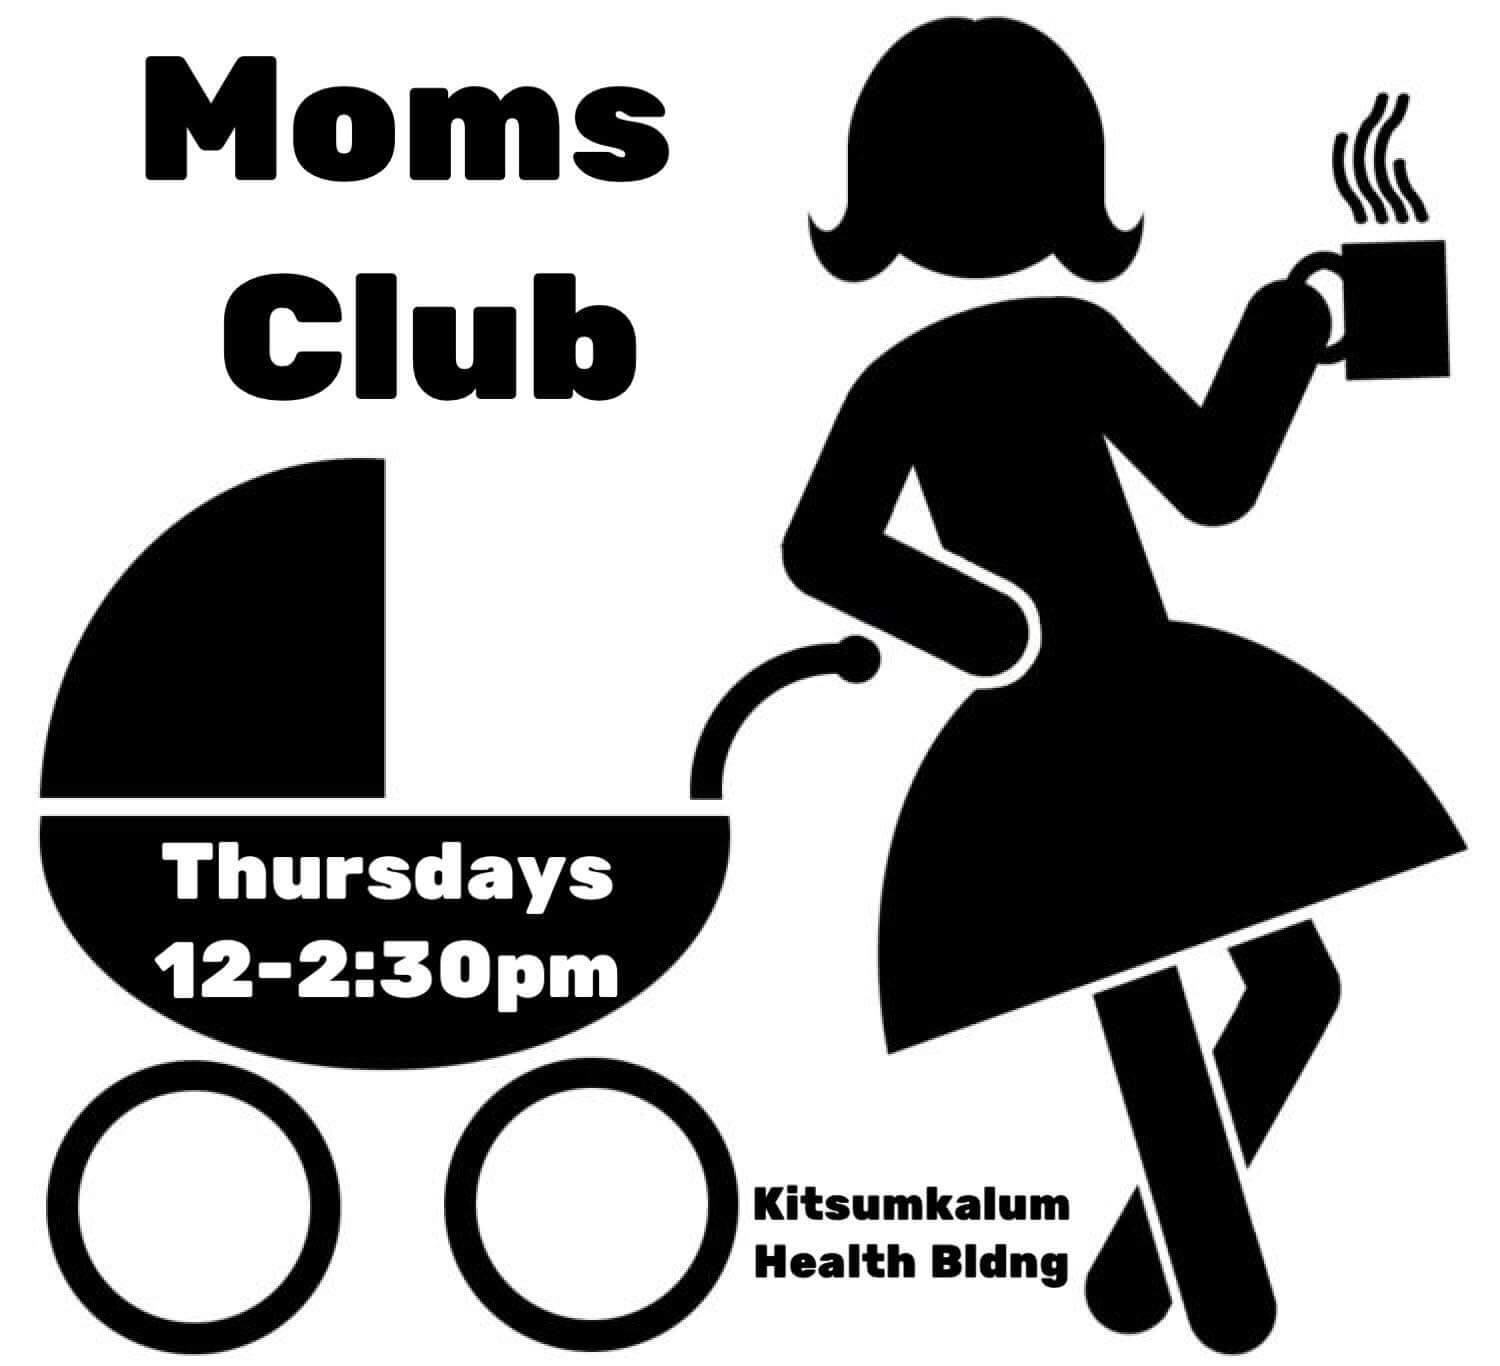 Mom’s Club on Thursdays at Kitsumkalum Health